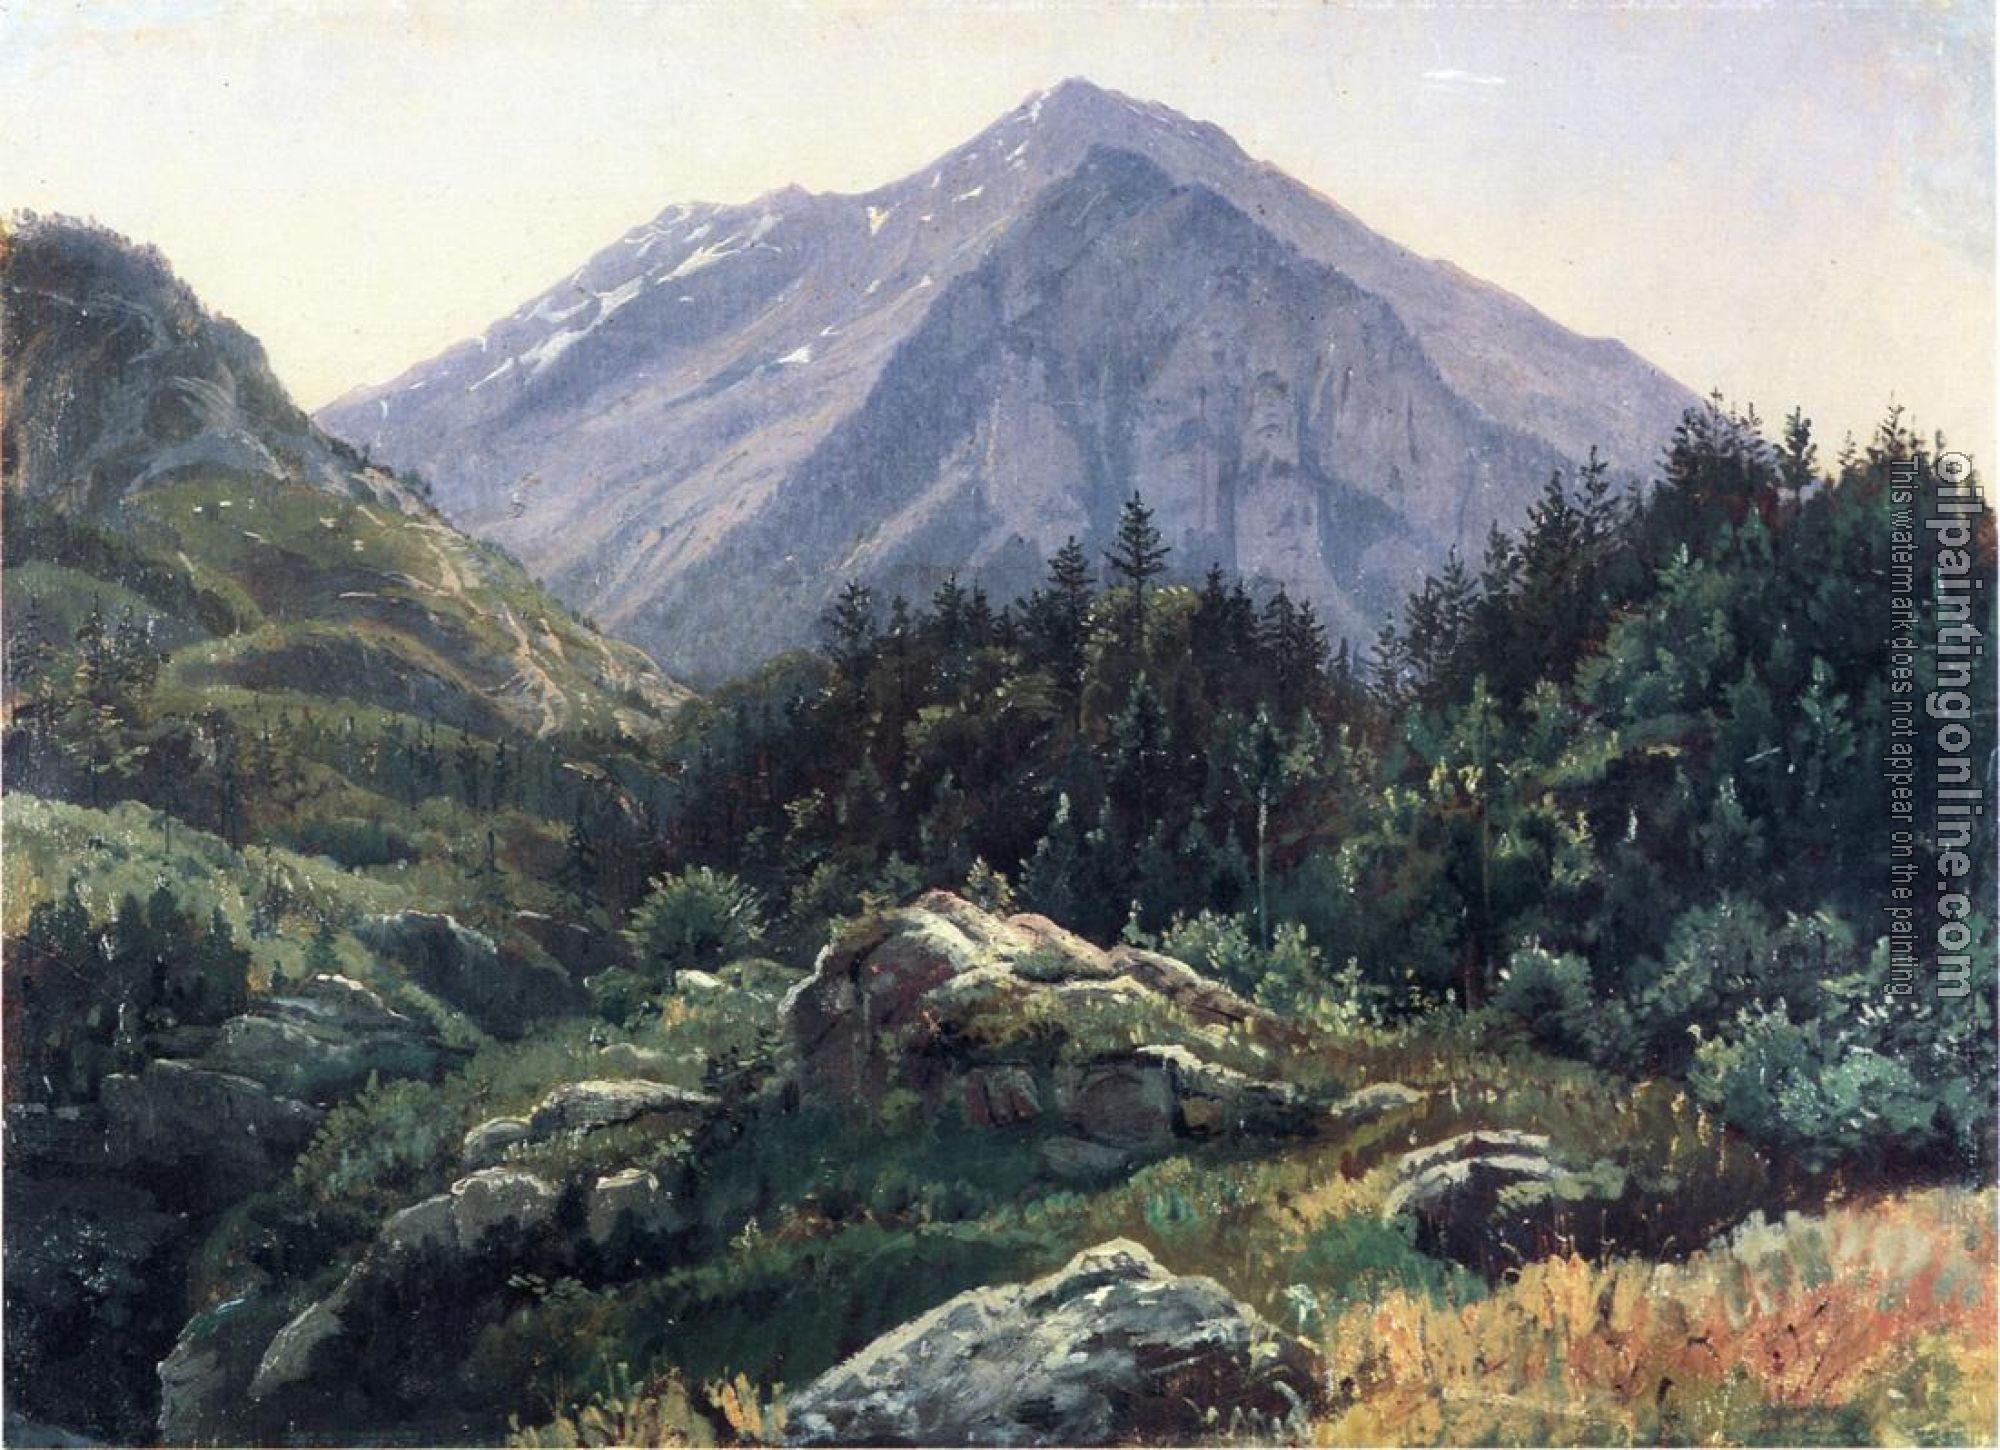 William Stanley Haseltine - Mountain Scenery Switzerland